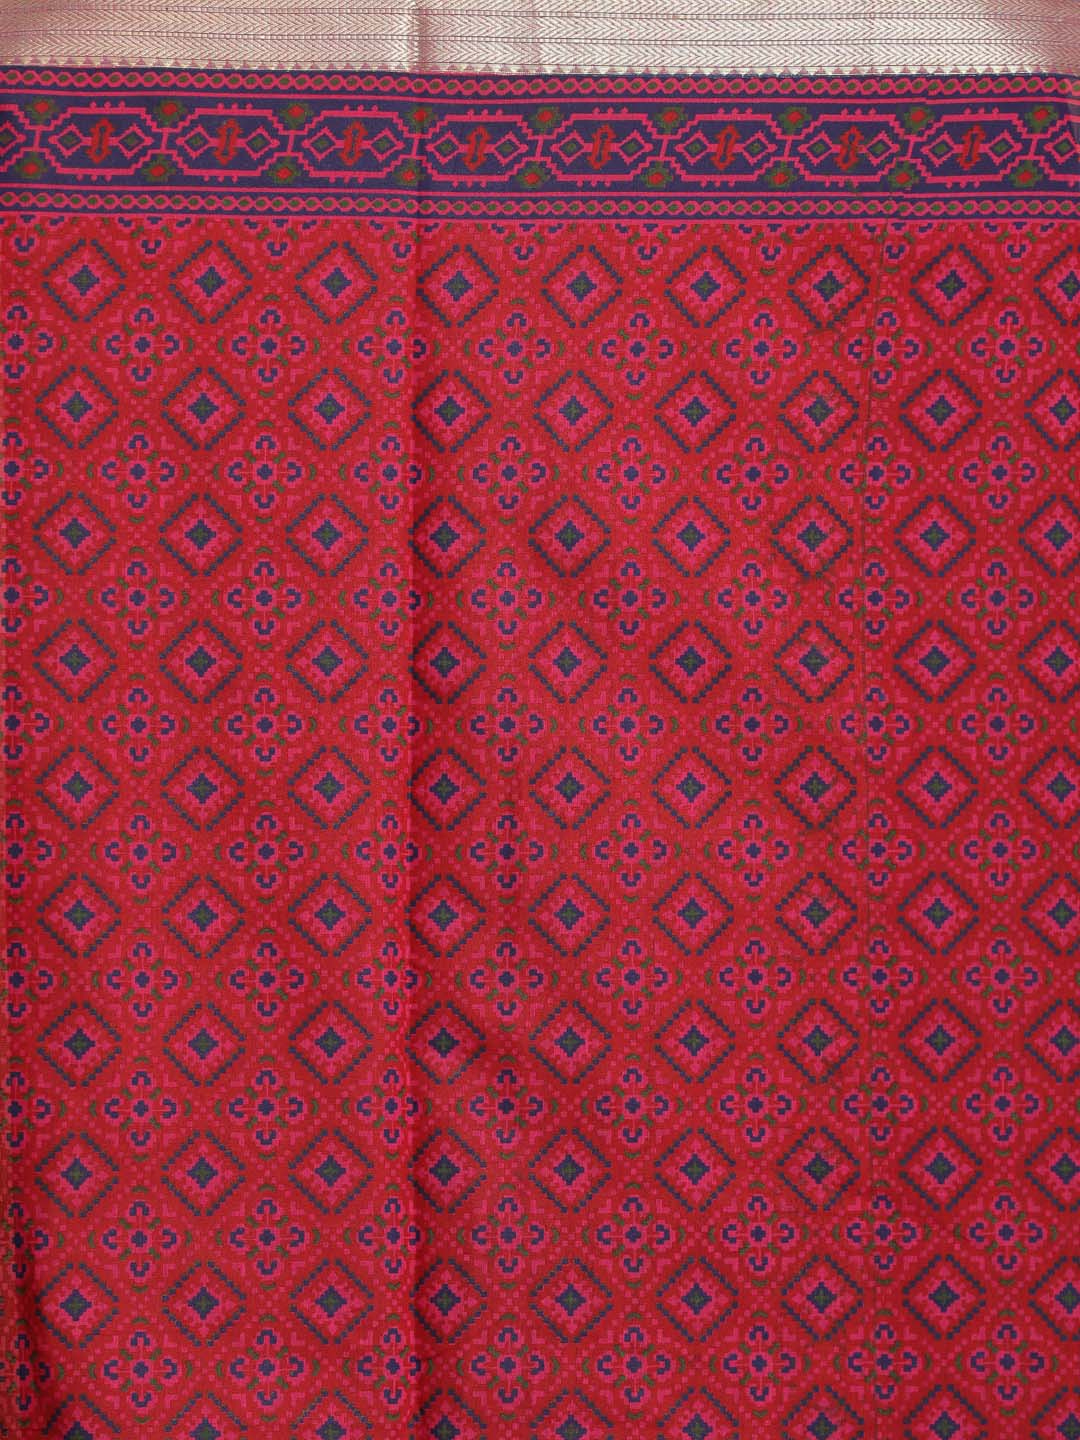 Indethnic Printed Cotton Blend Saree in Magenta - Saree Detail View